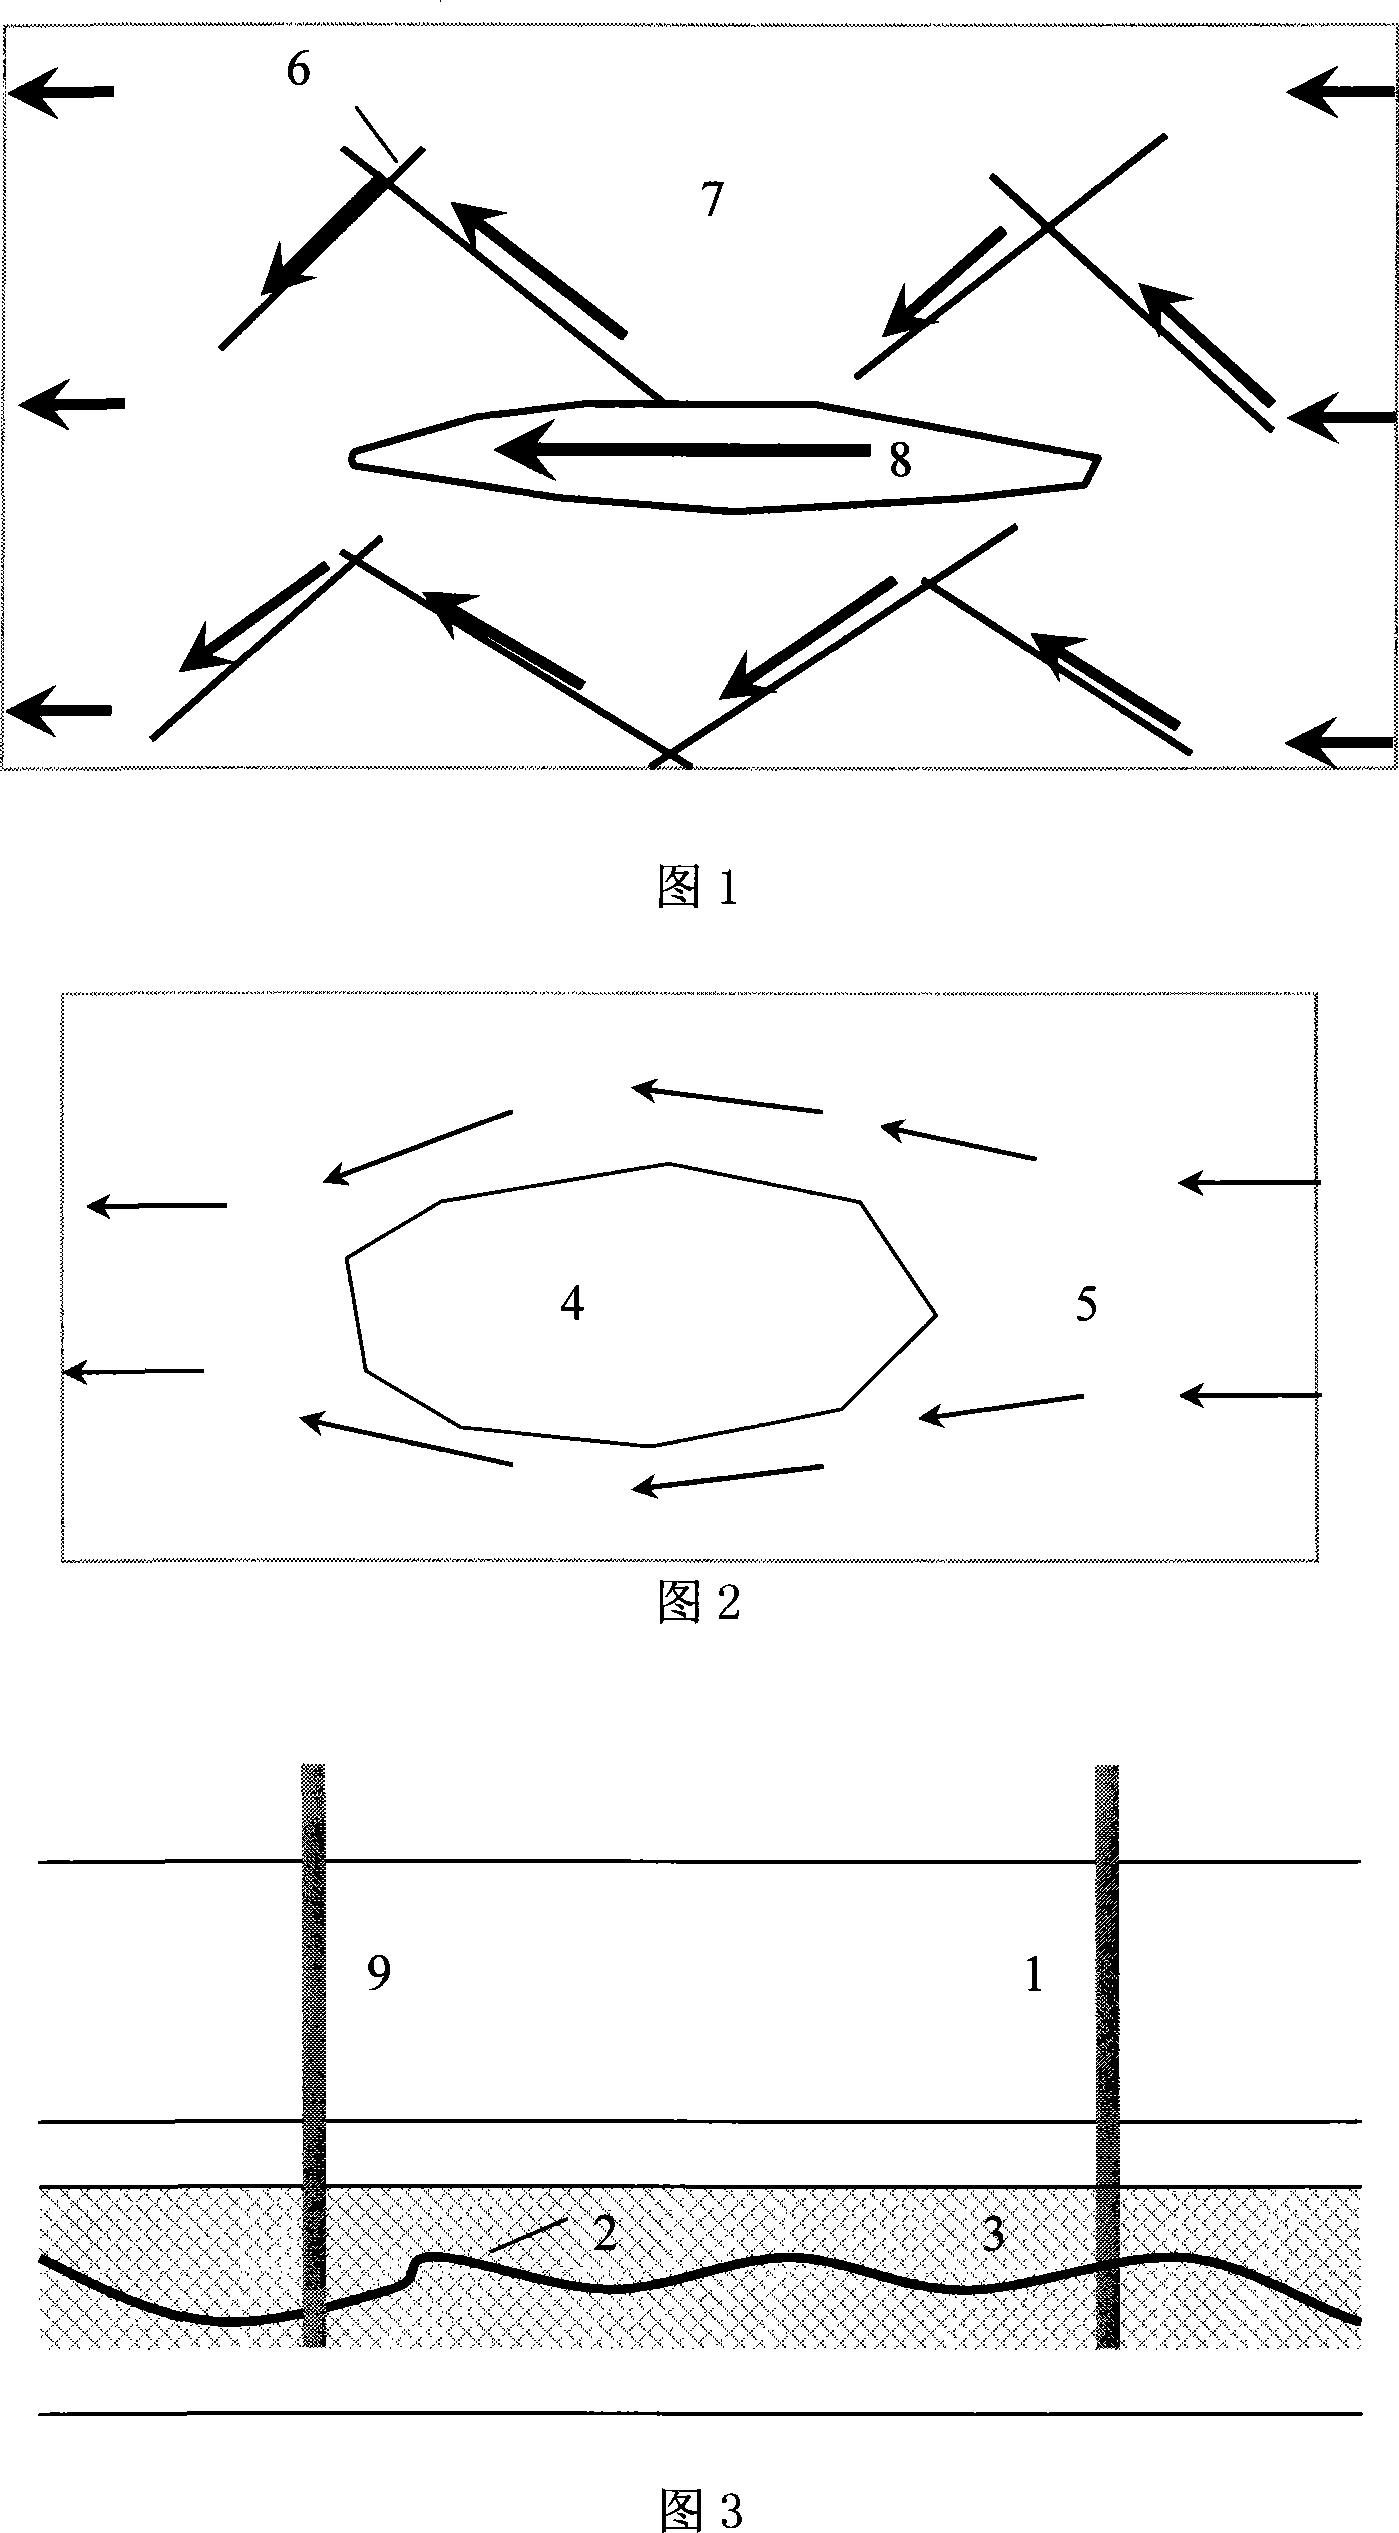 Horizontal fissure fluctuation leaching mining method